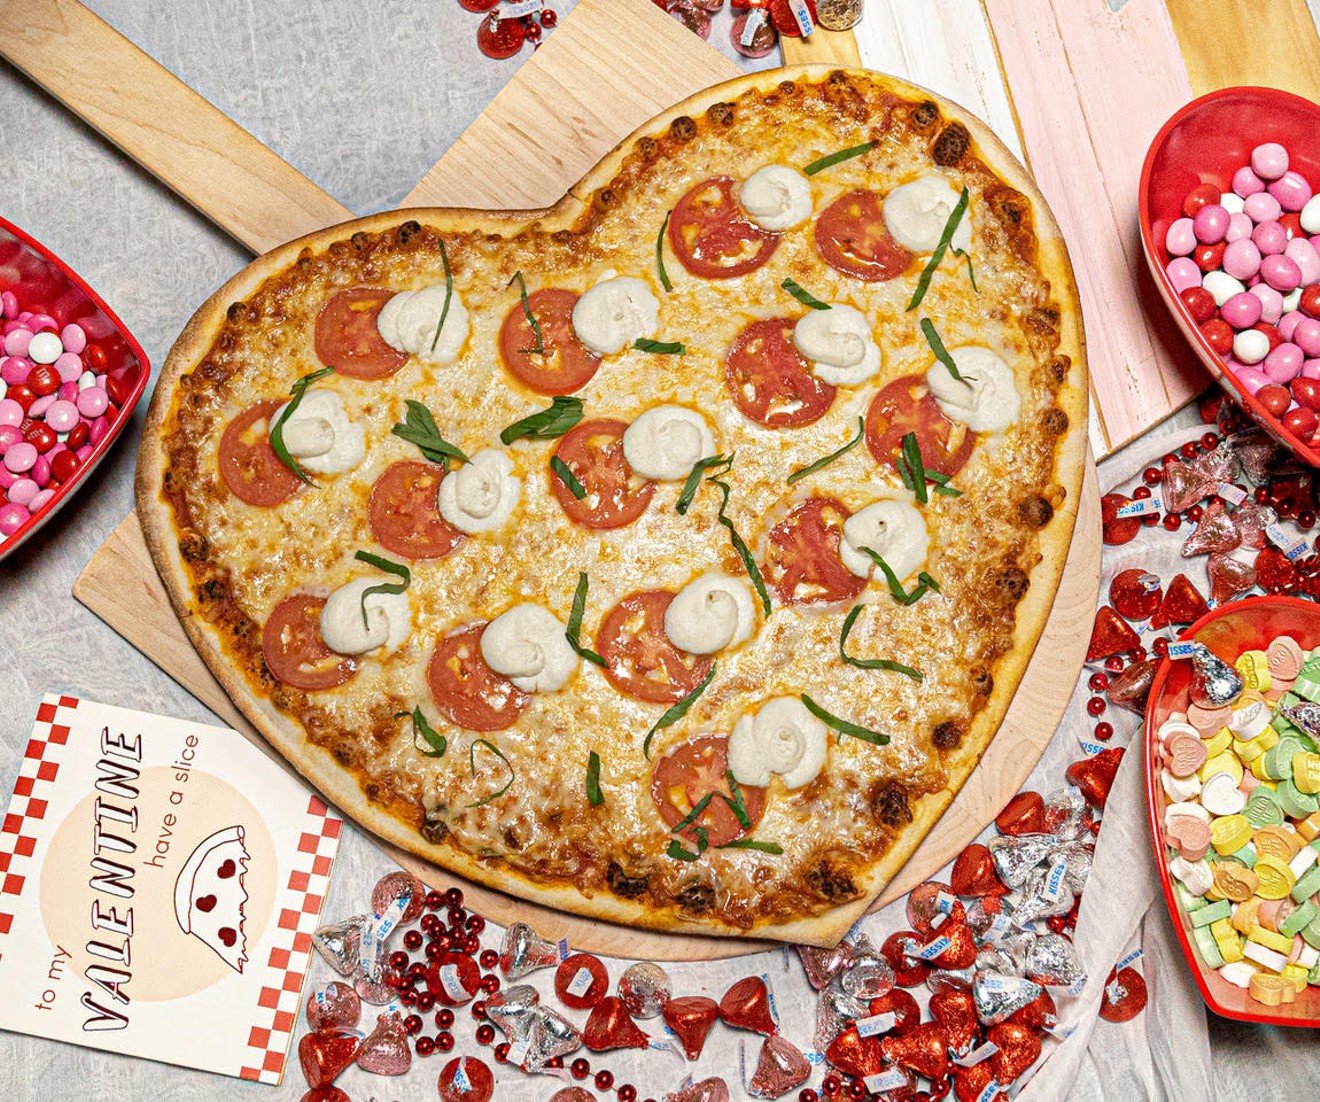 We heart Greenville Avenue Pizza's Co.'s pizza.